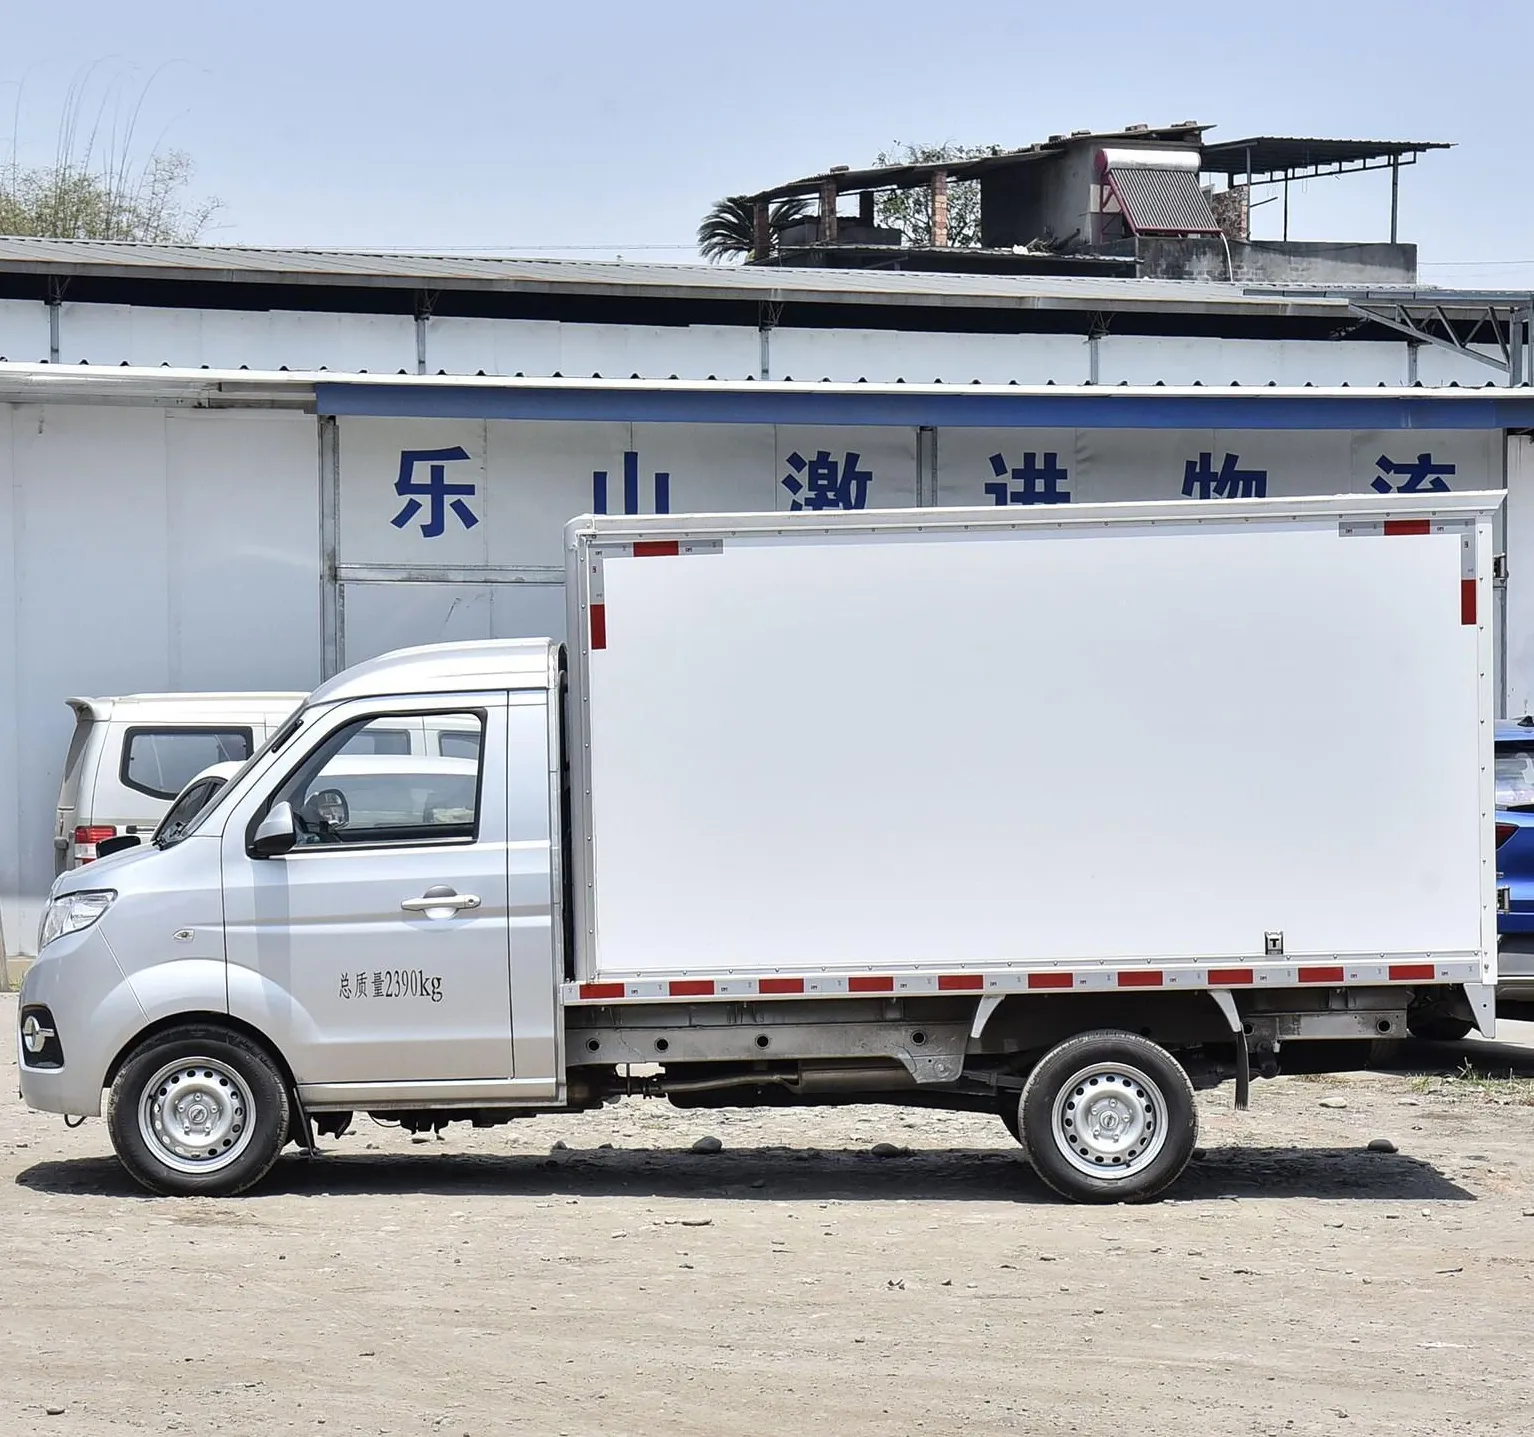 China Pickup Jinbei T30 Novo Pickup Truck com Gasolina a Gás